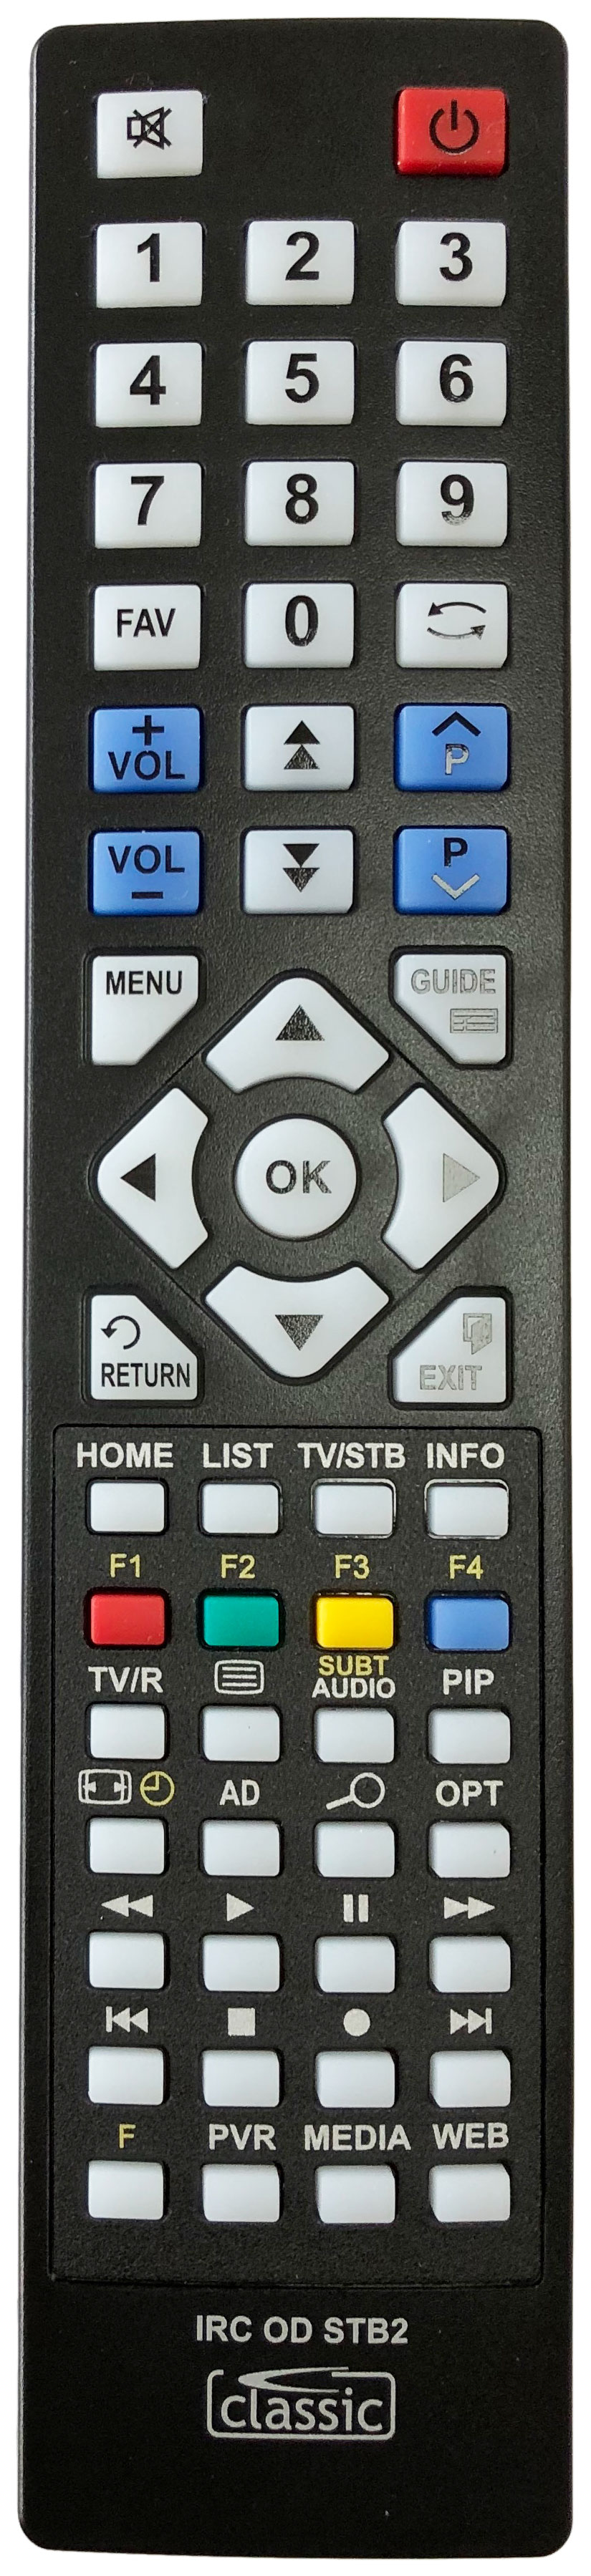 BUSH DVB-T2 PVR MPEG4 Remote Control